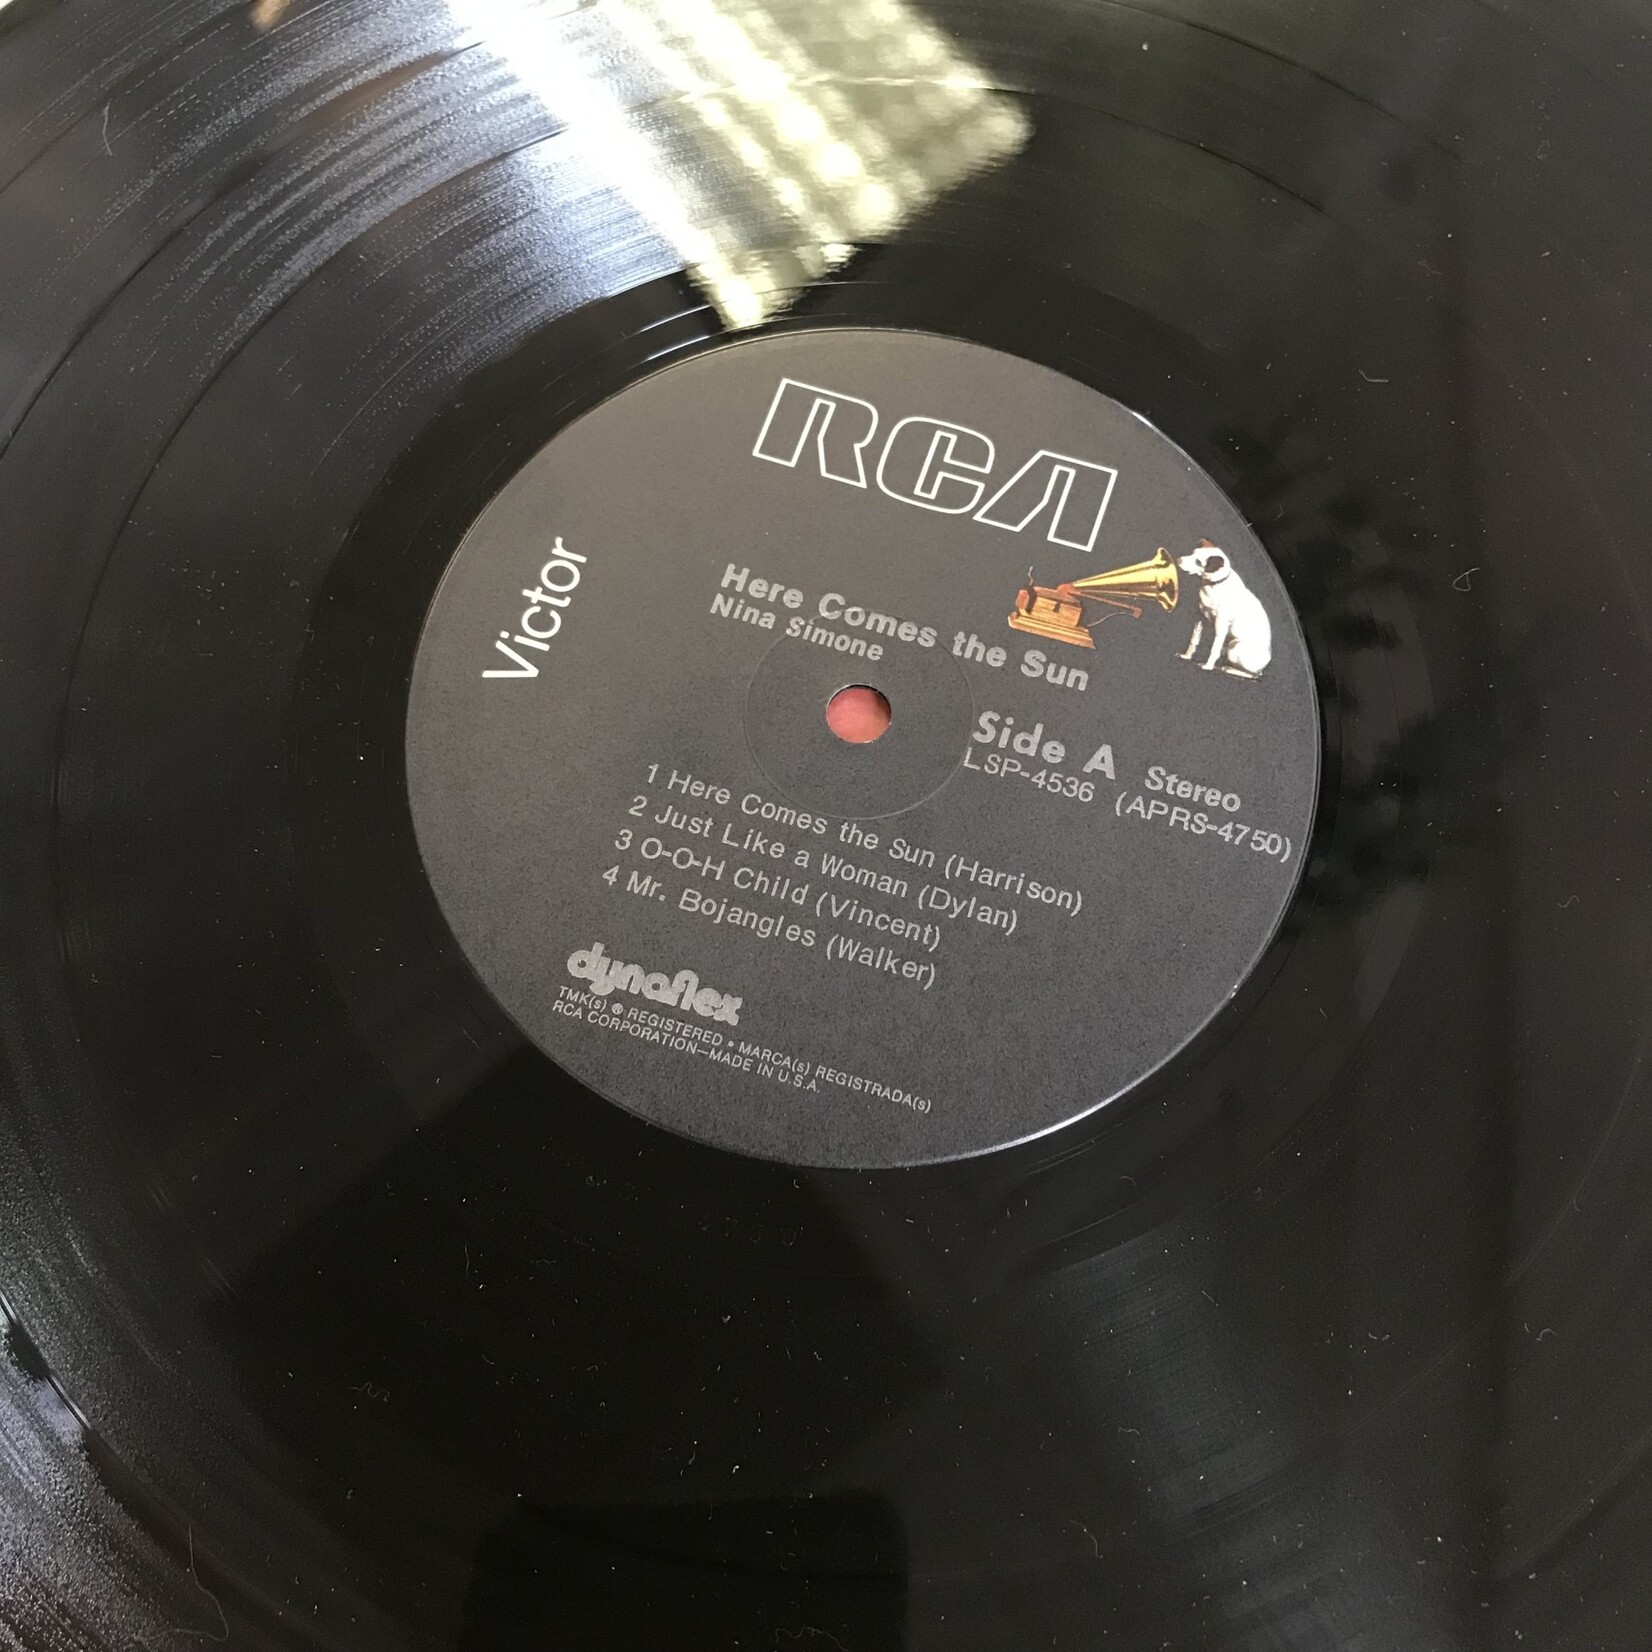 Nina Simone - Here Comes The Sun - LSP4536 - Vinyl LP (USED)